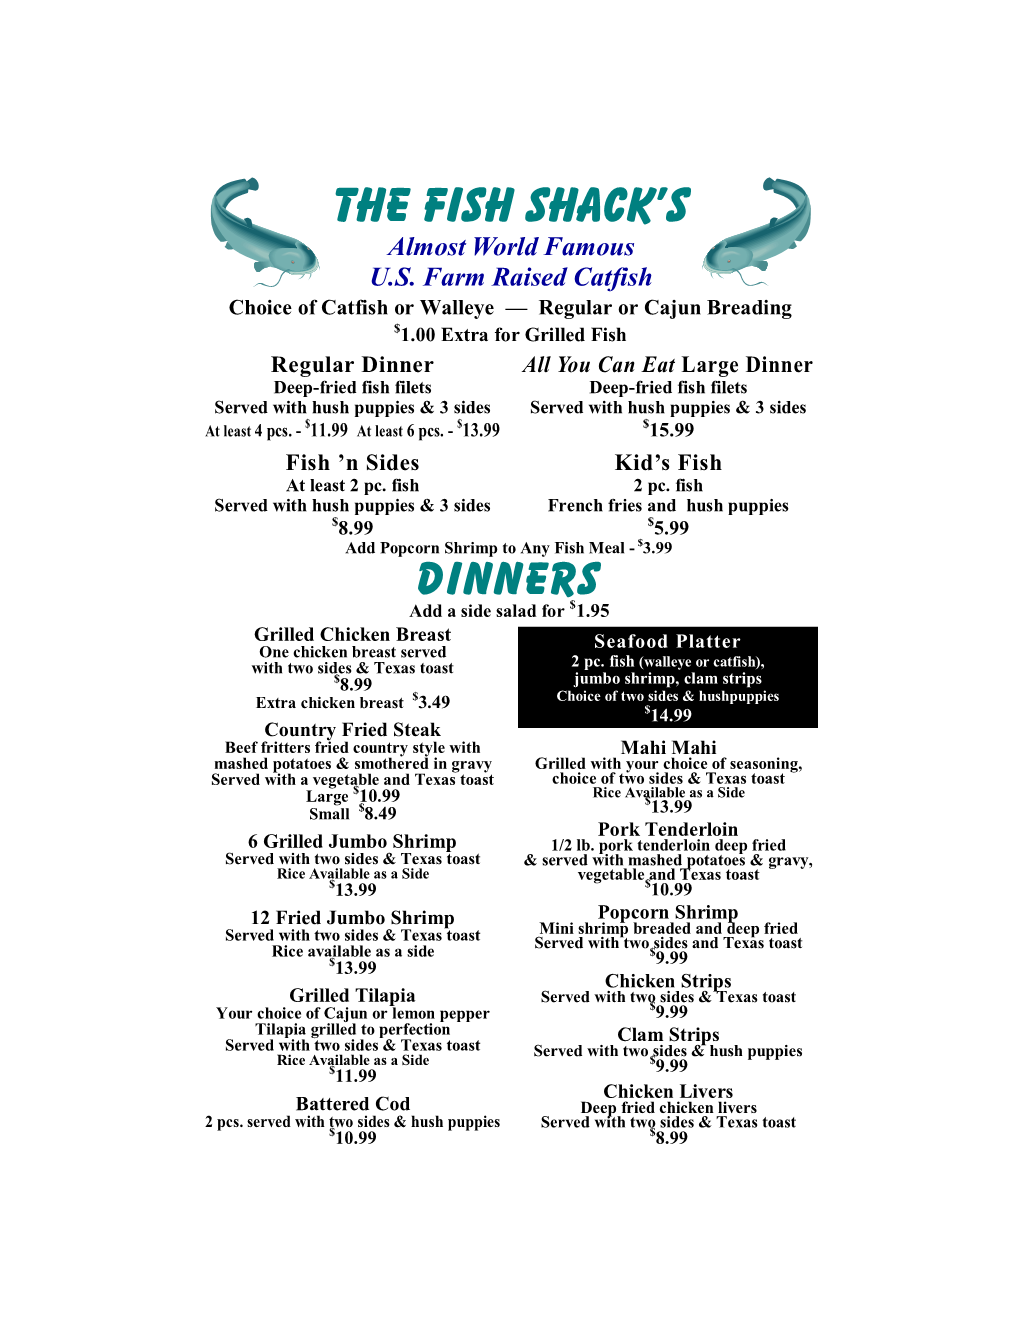 The Fish Shack's